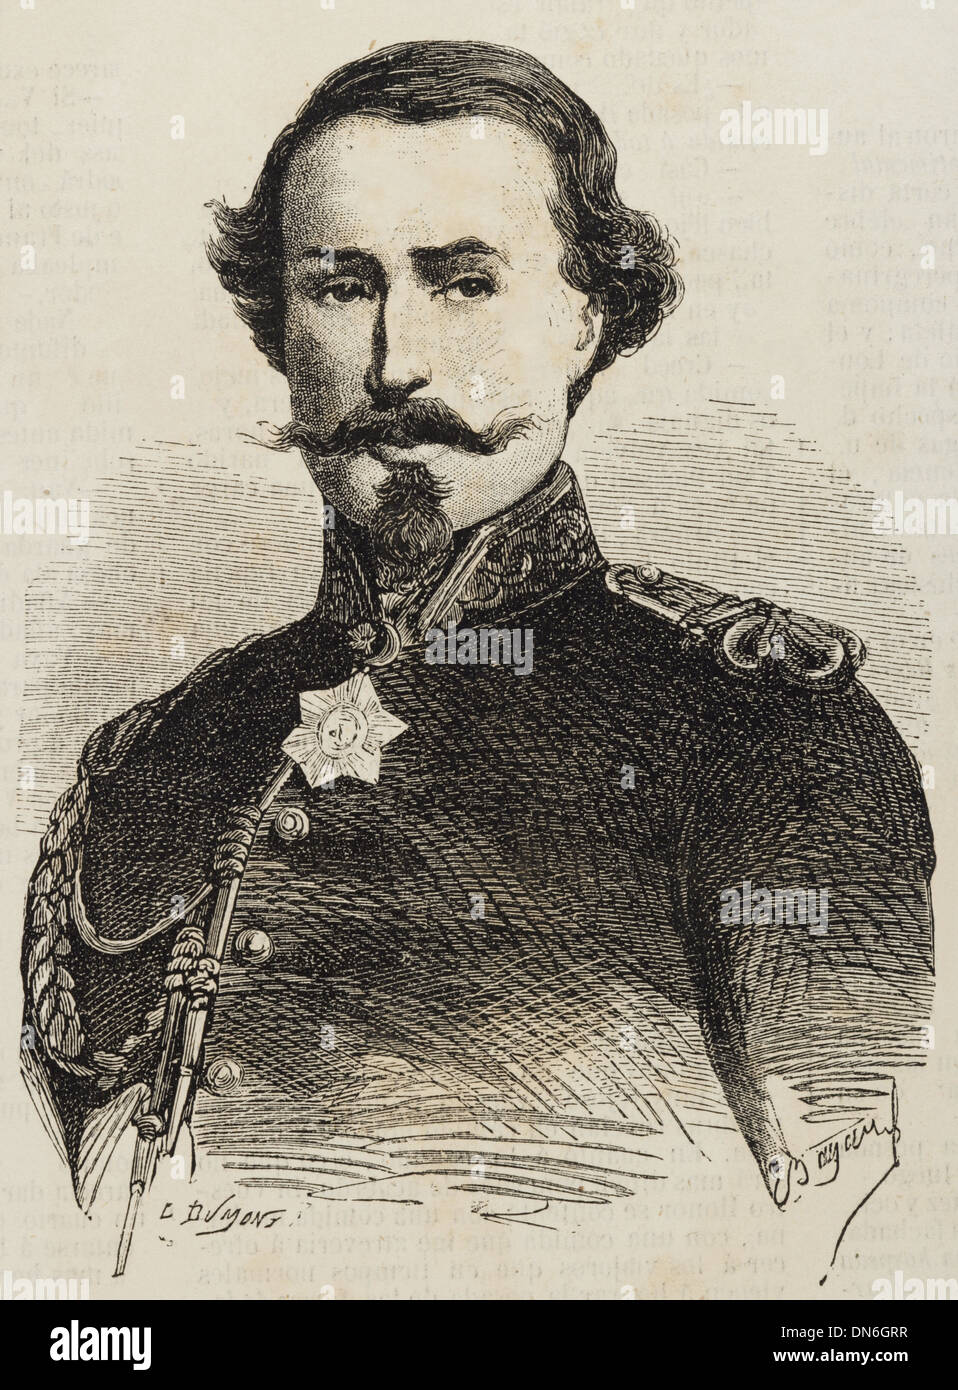 Alfonso La Marmora (1804-1878). Italian military and statesman. Prime Minister of Italy. Engraving. Stock Photo